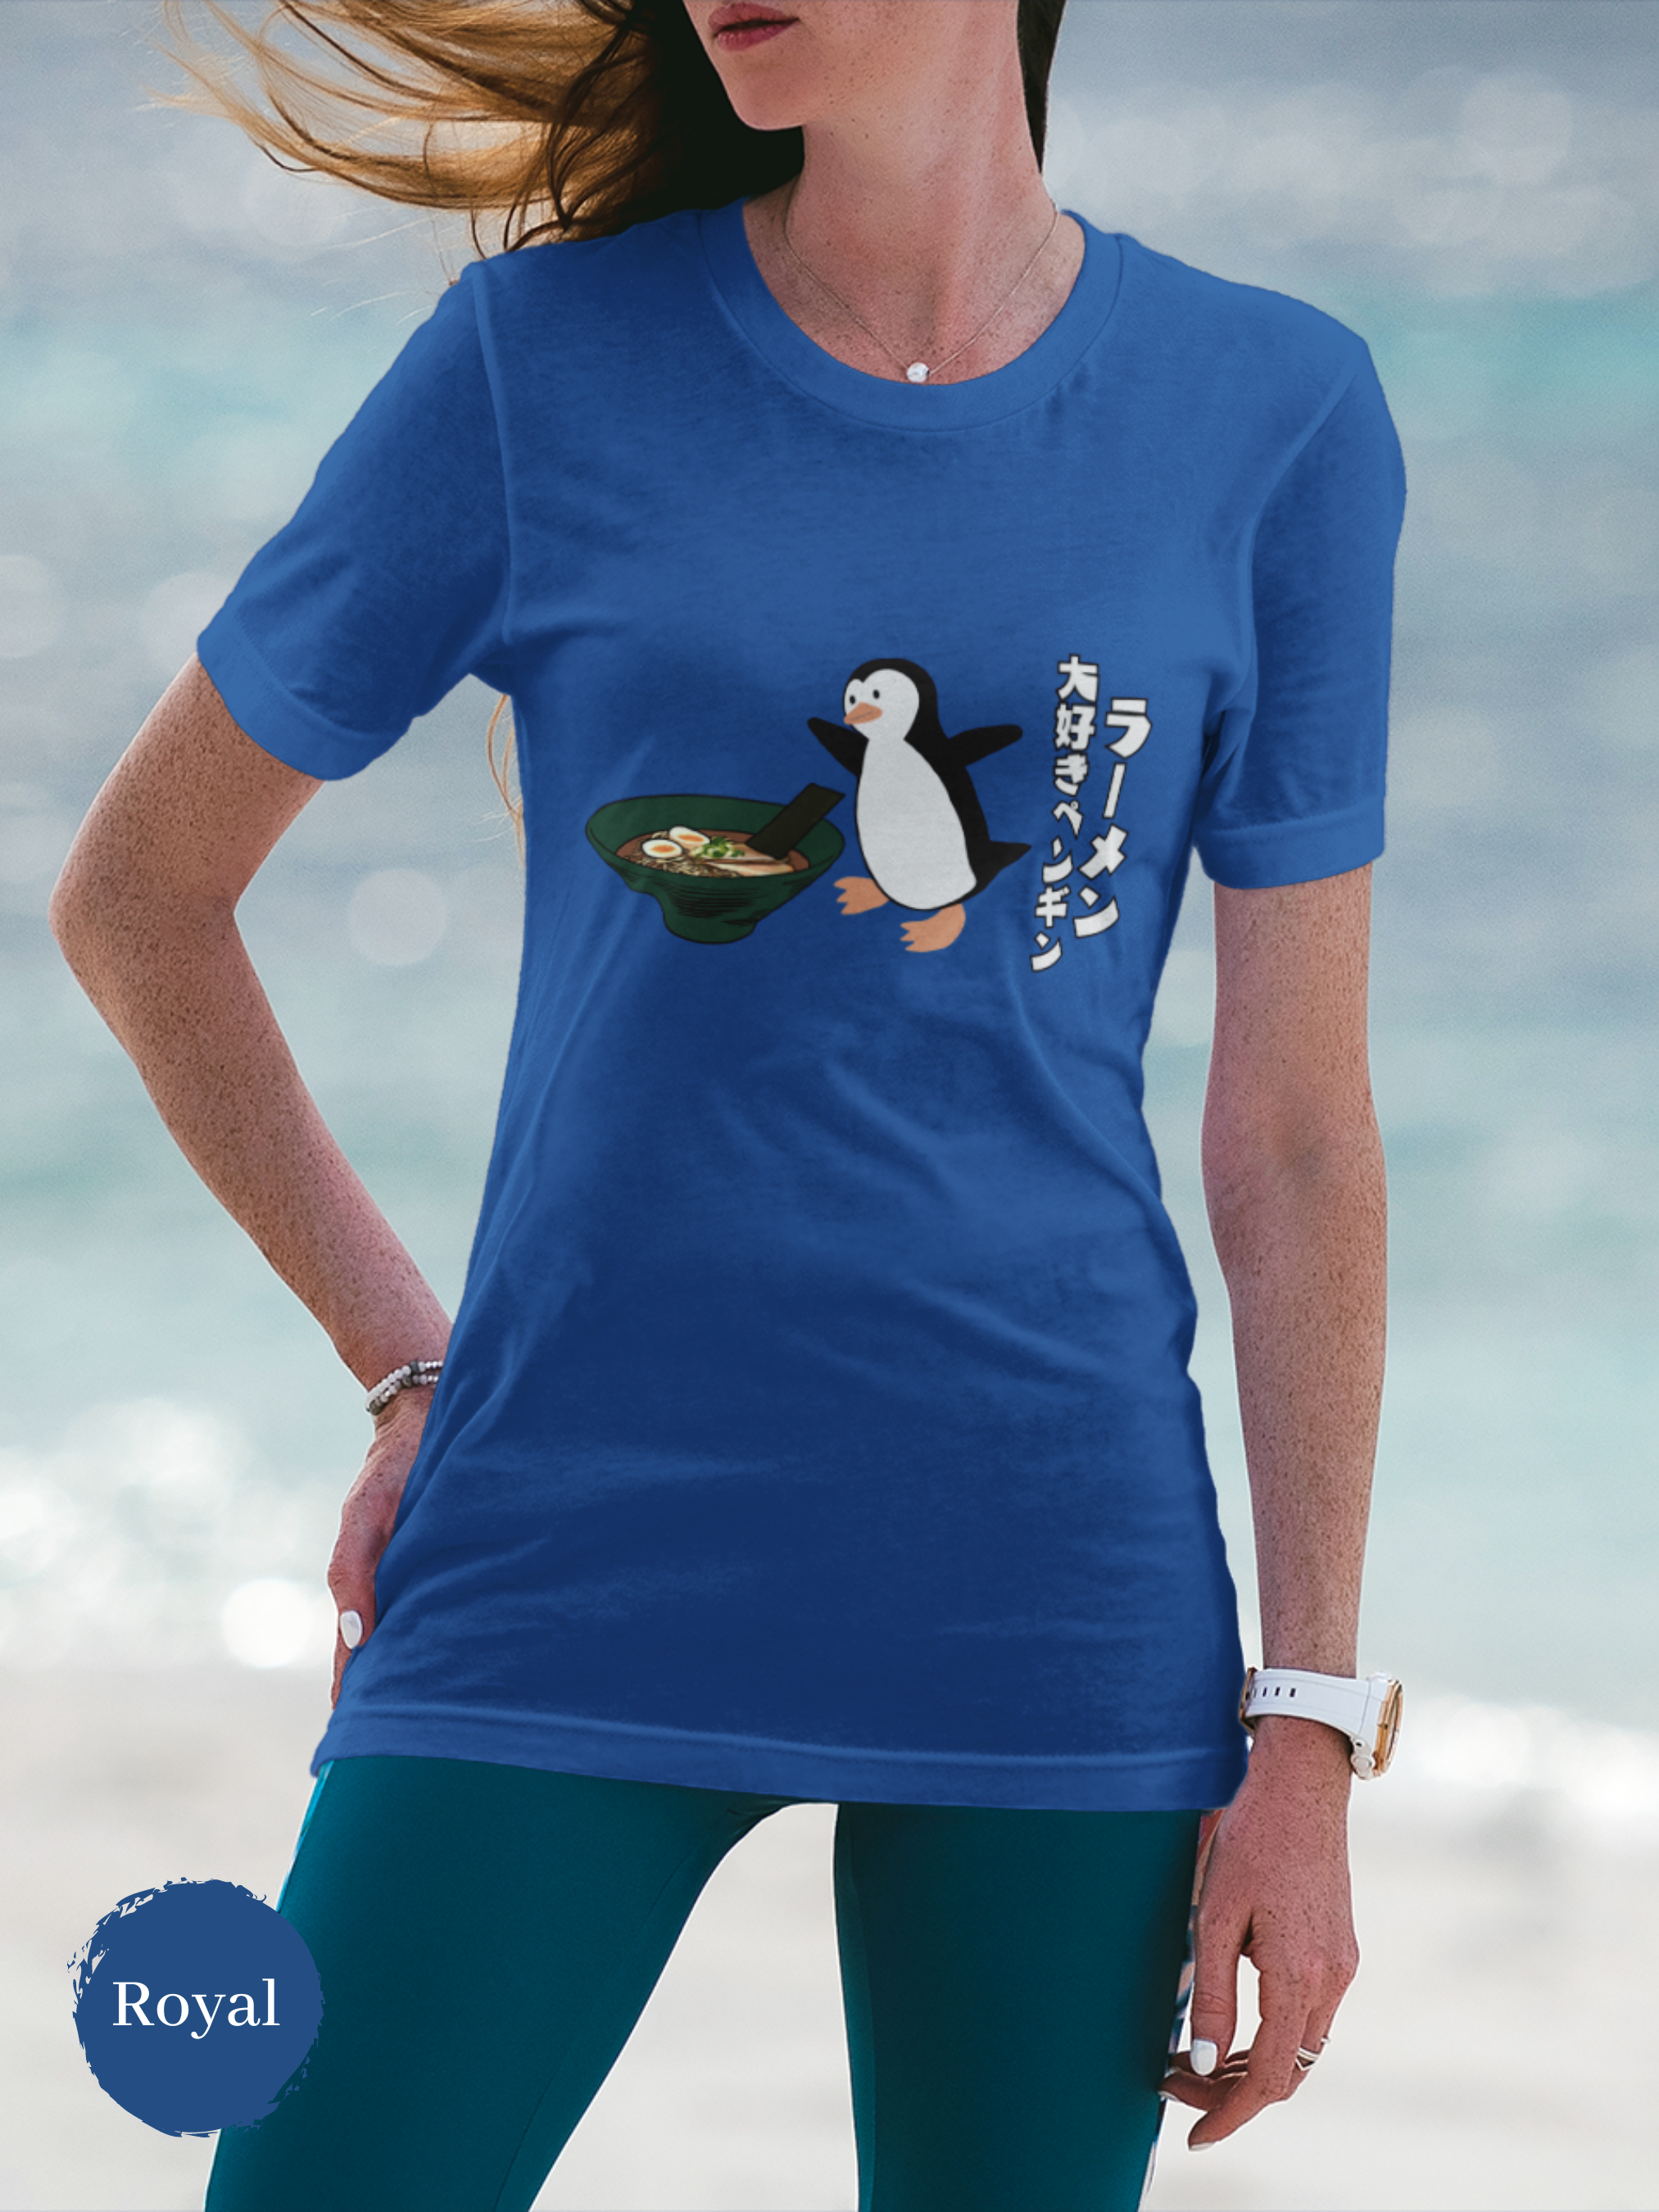 Penguin Ramen T-shirt: Embrace Japanese Cuisine with the Ramen-Loving Penguin - A Foodie Shirt Featuring Vibrant Ramen Art